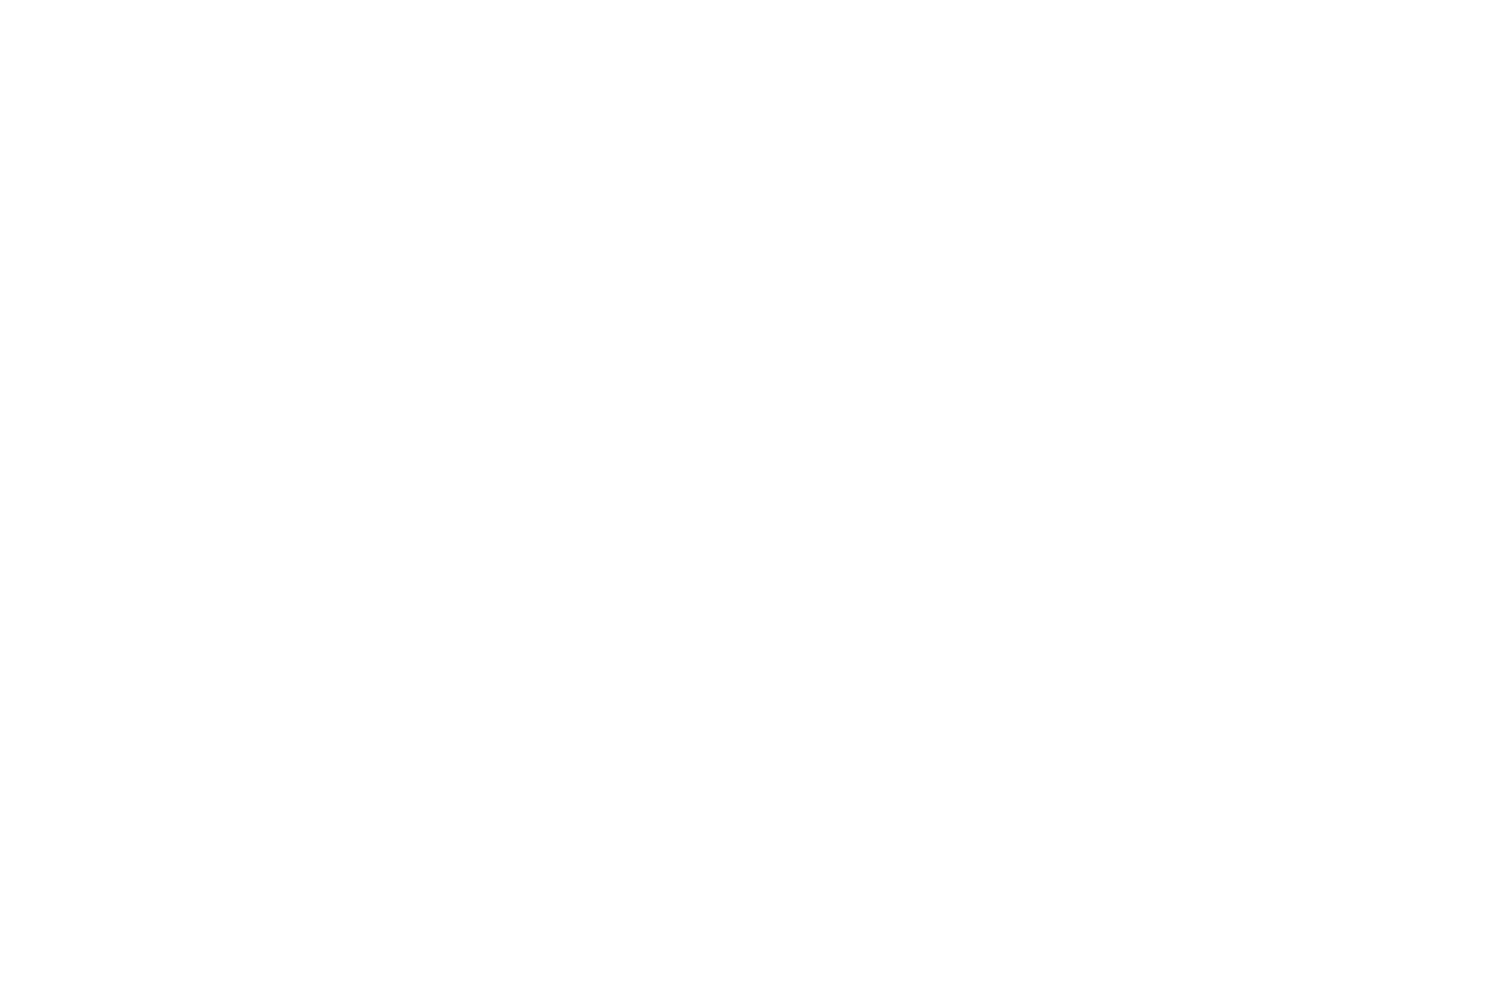 The Silverwood Partnership